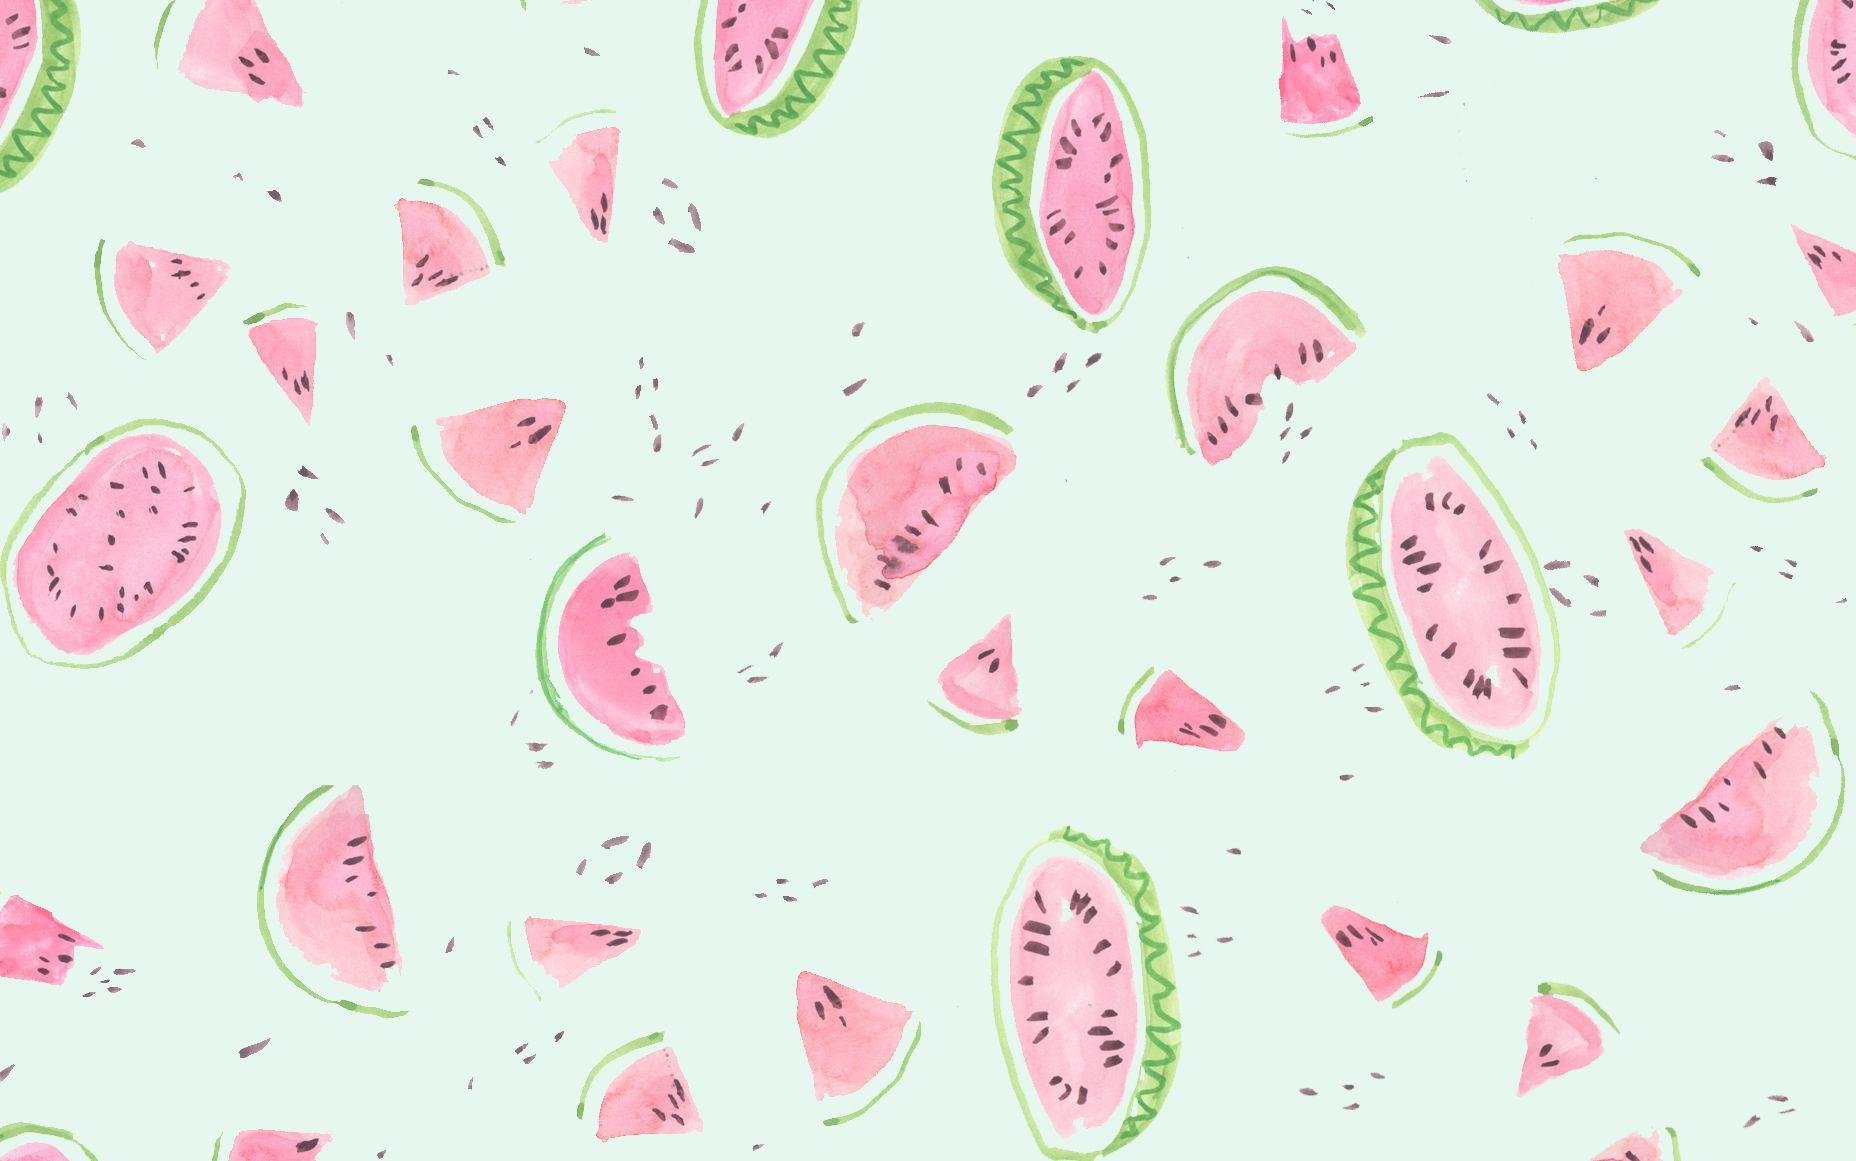 Watercolor Watermelon and Summer Fruits Wallpaper Mural • Wallmur®